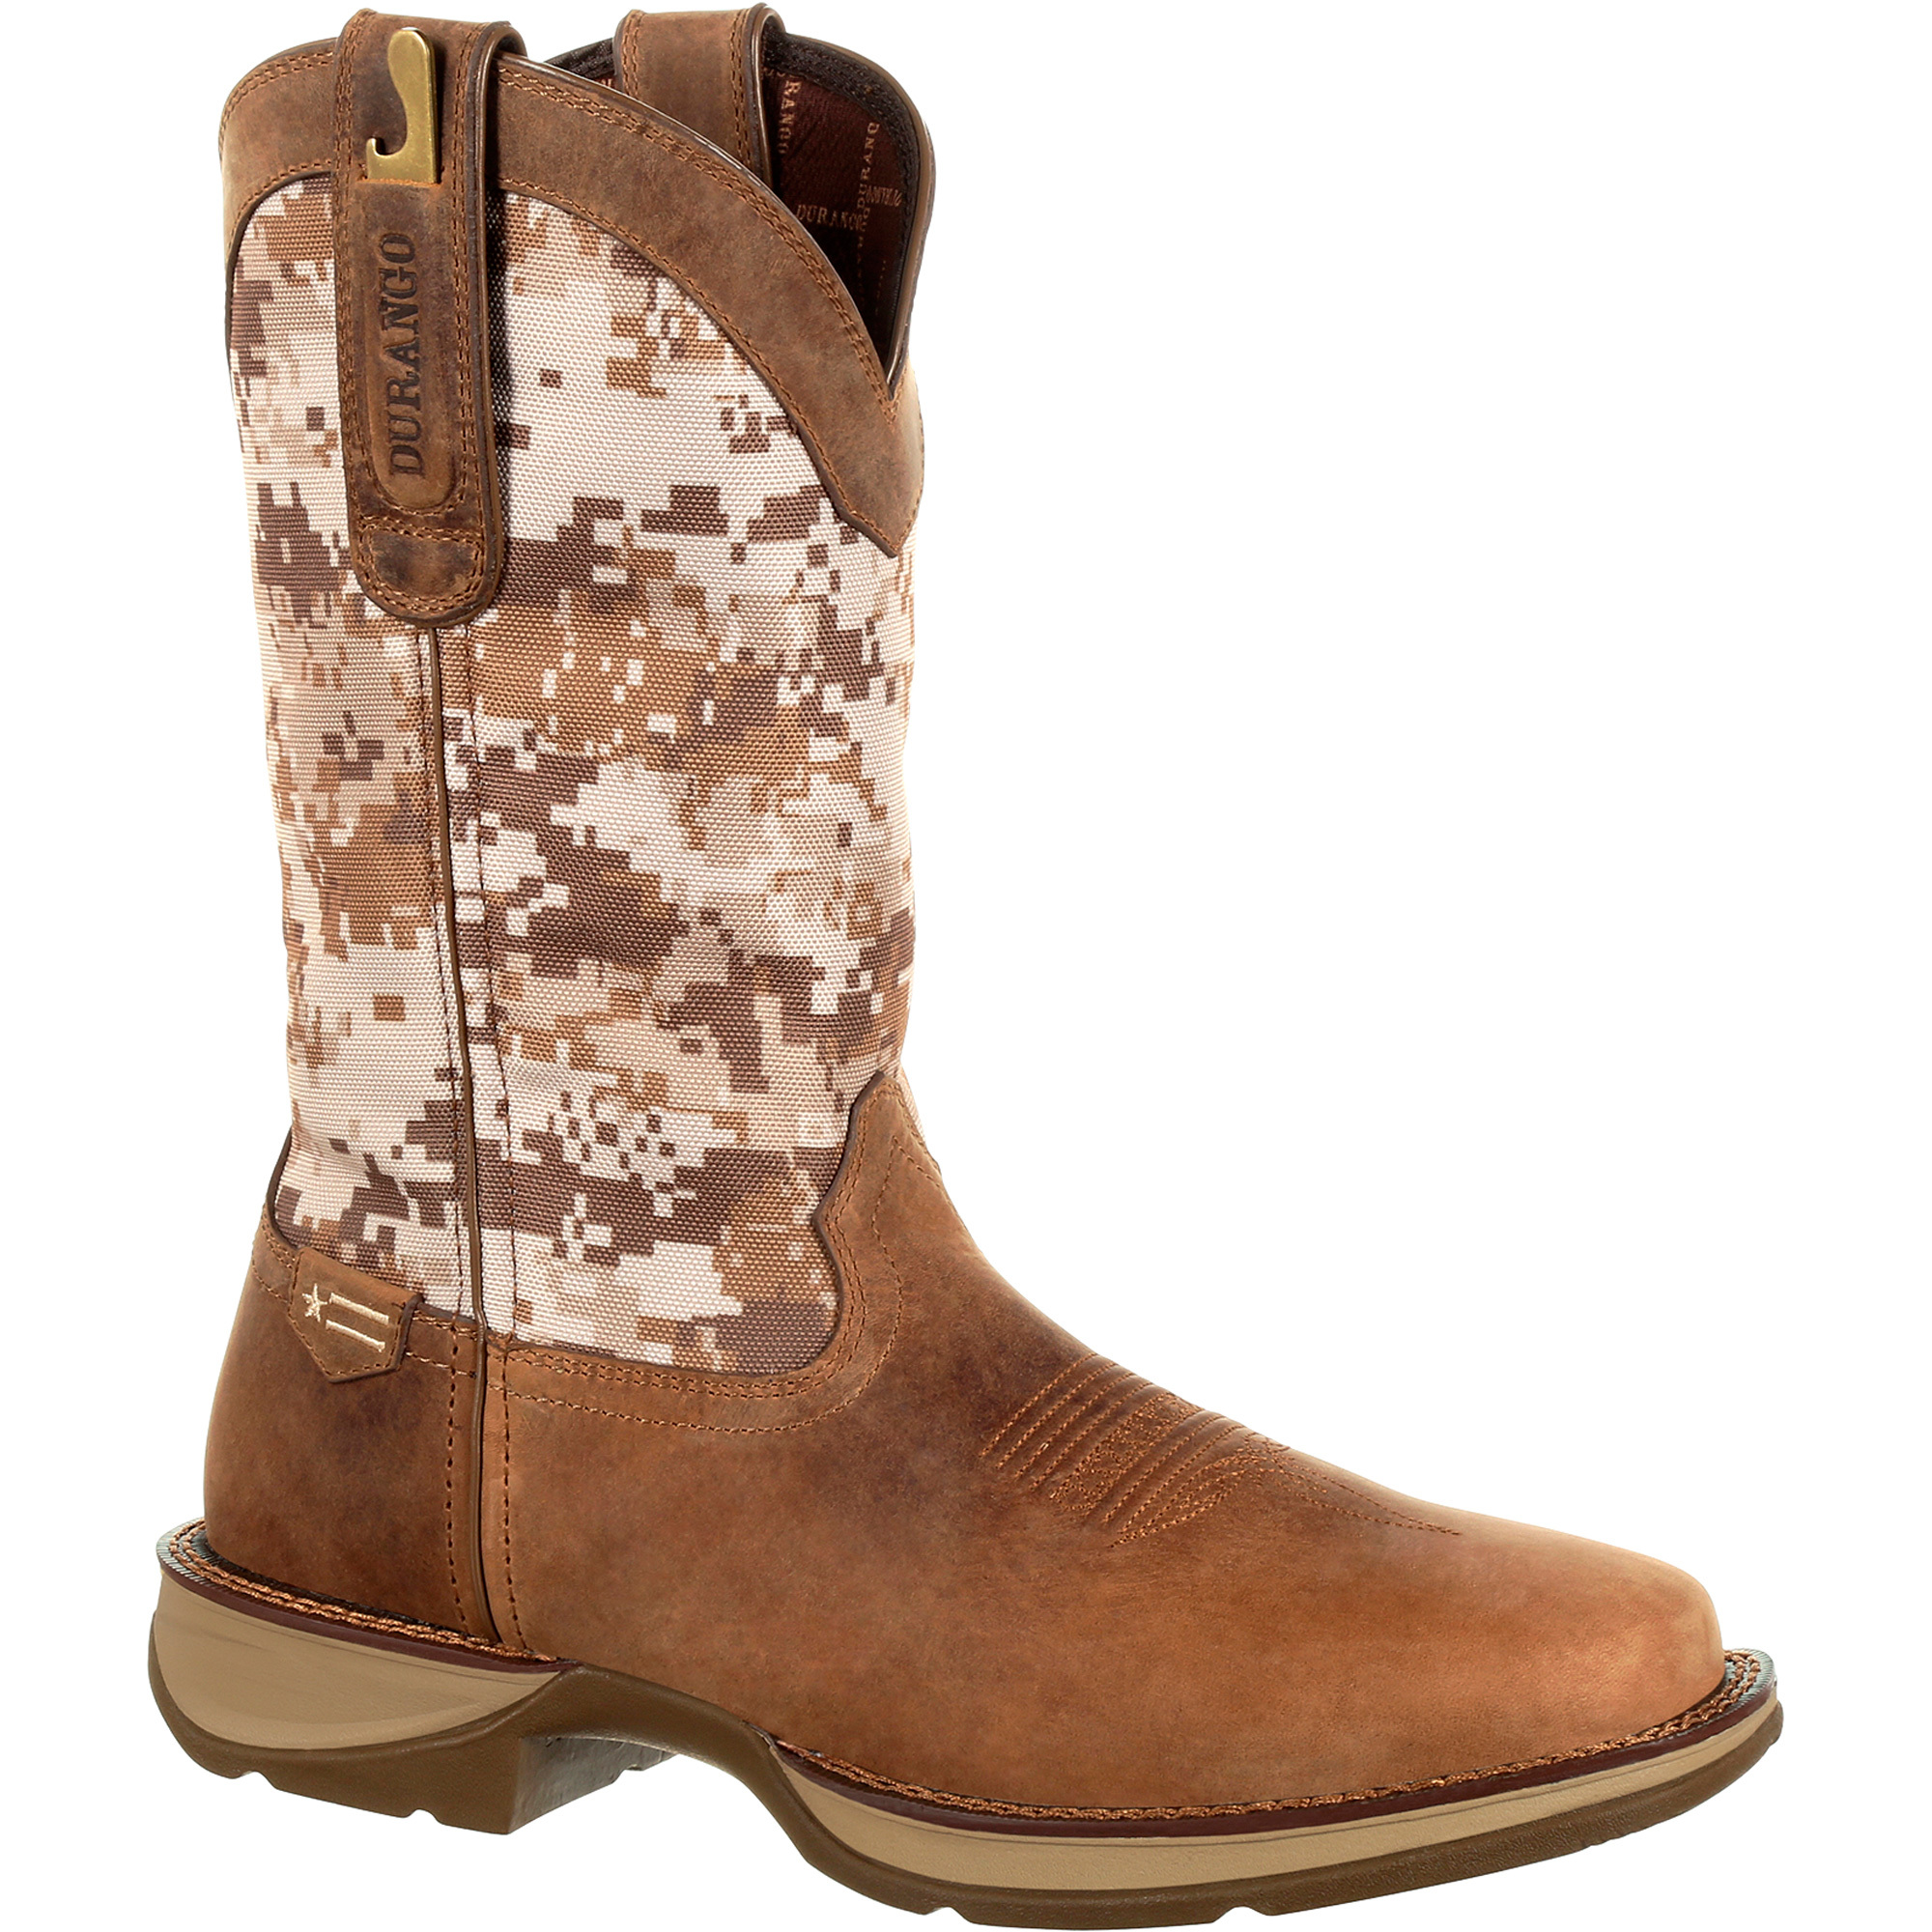 Durango Men's 12Inch Desert Camo Pull-On Rebel Western Boots â Dusty Brown/Desert Camo, Size 11 1/2 Wide, Model DDB0166